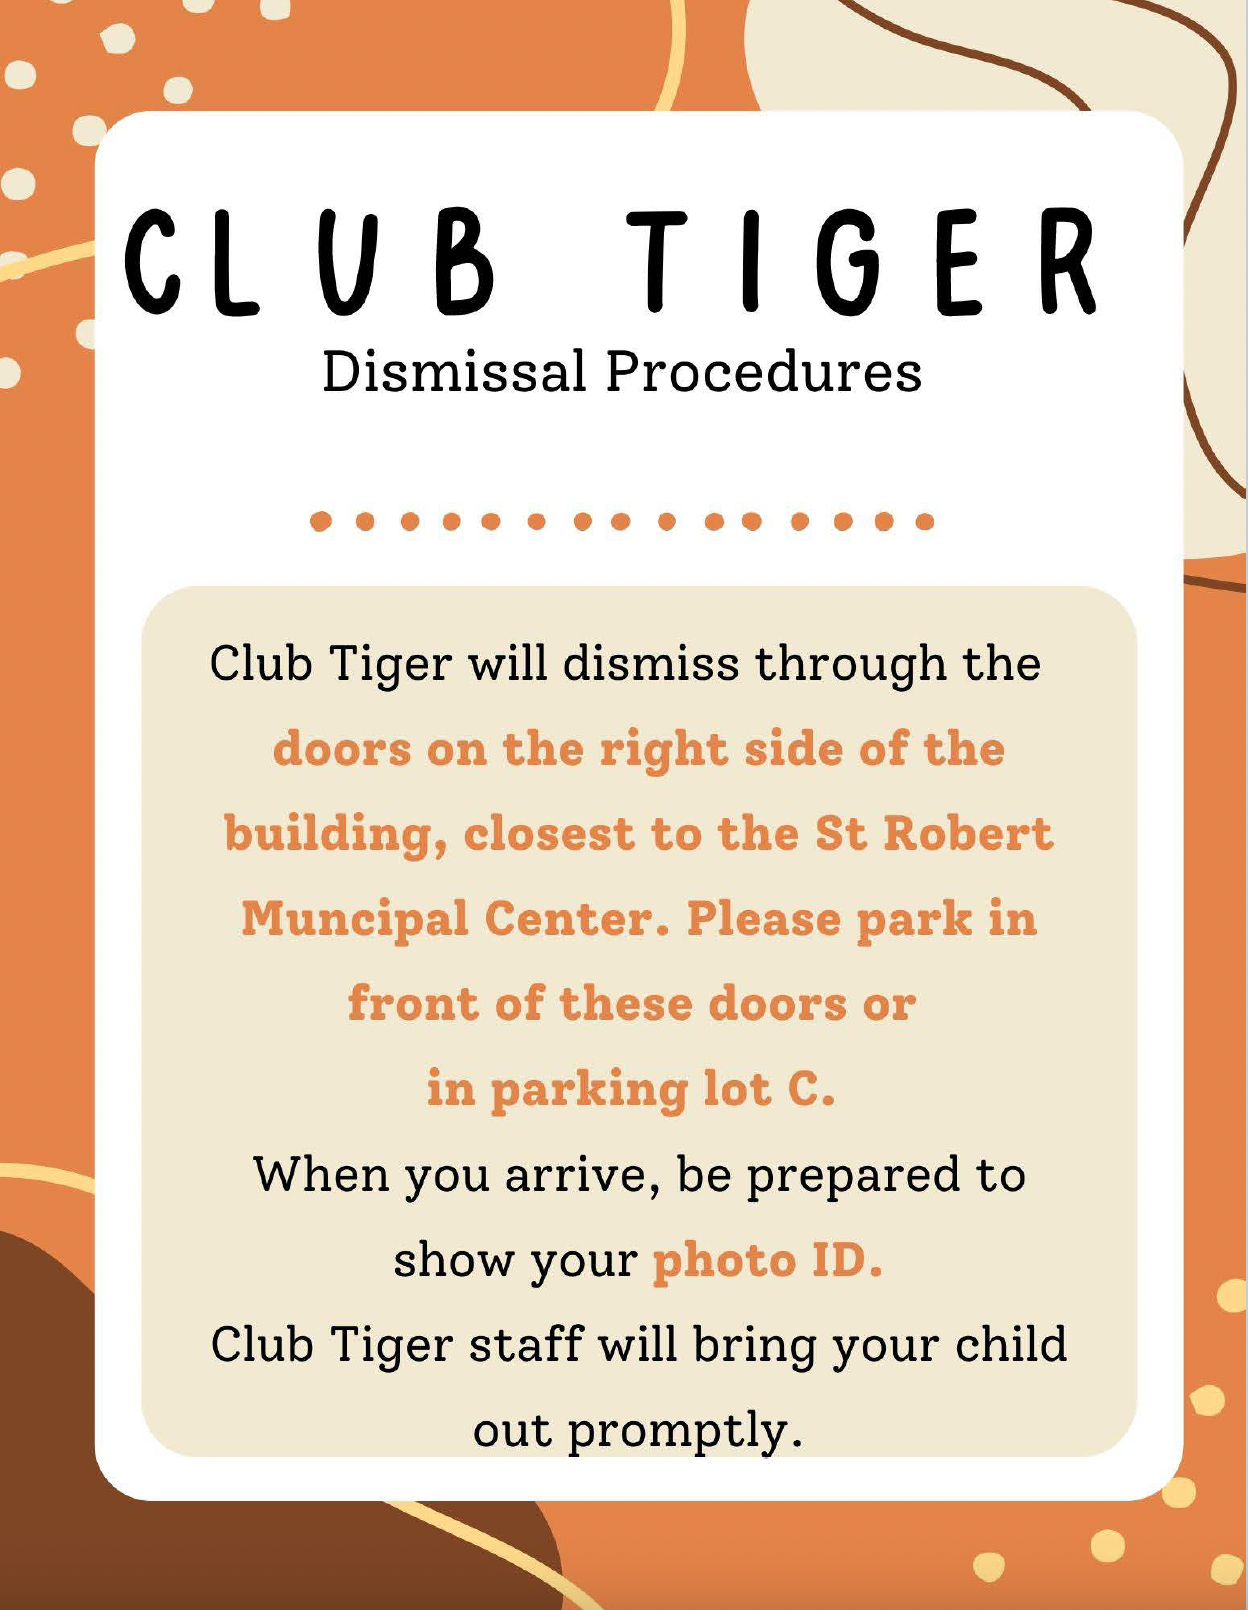 Club Tiger